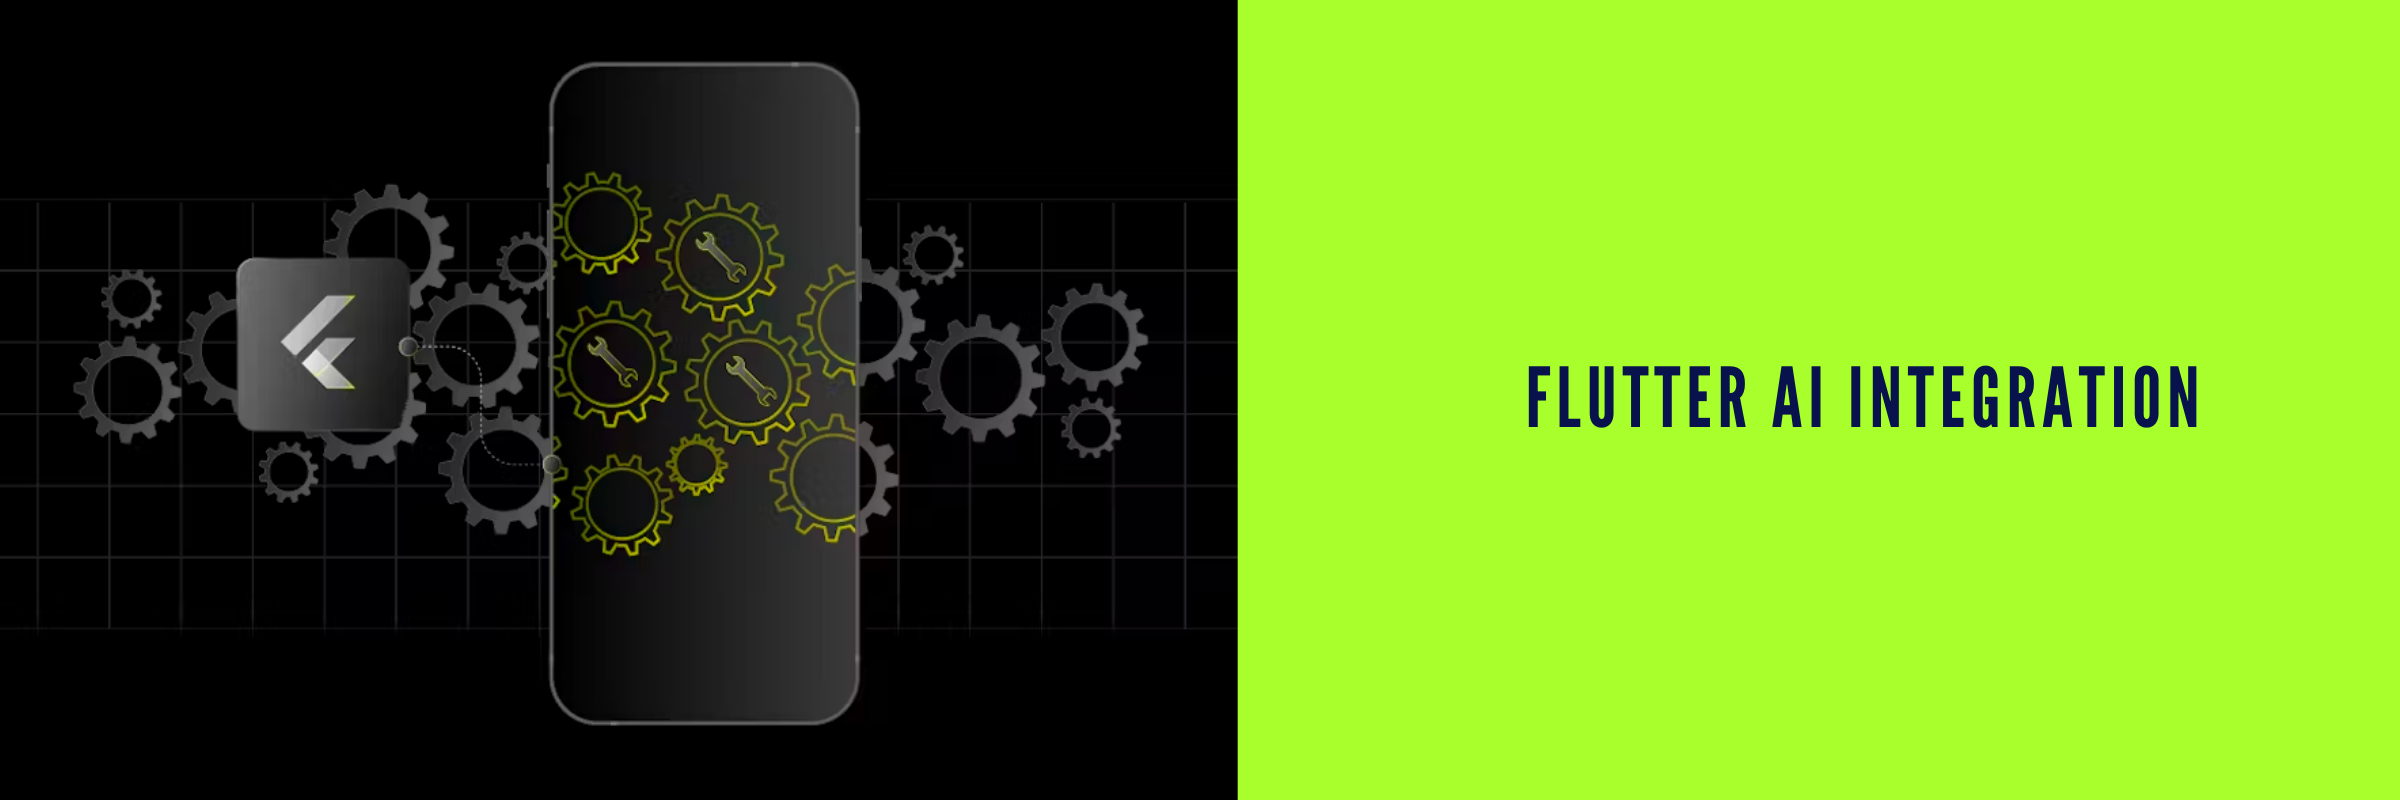 Flutter AI Integration: How to Integrate AI into a Flutter App?